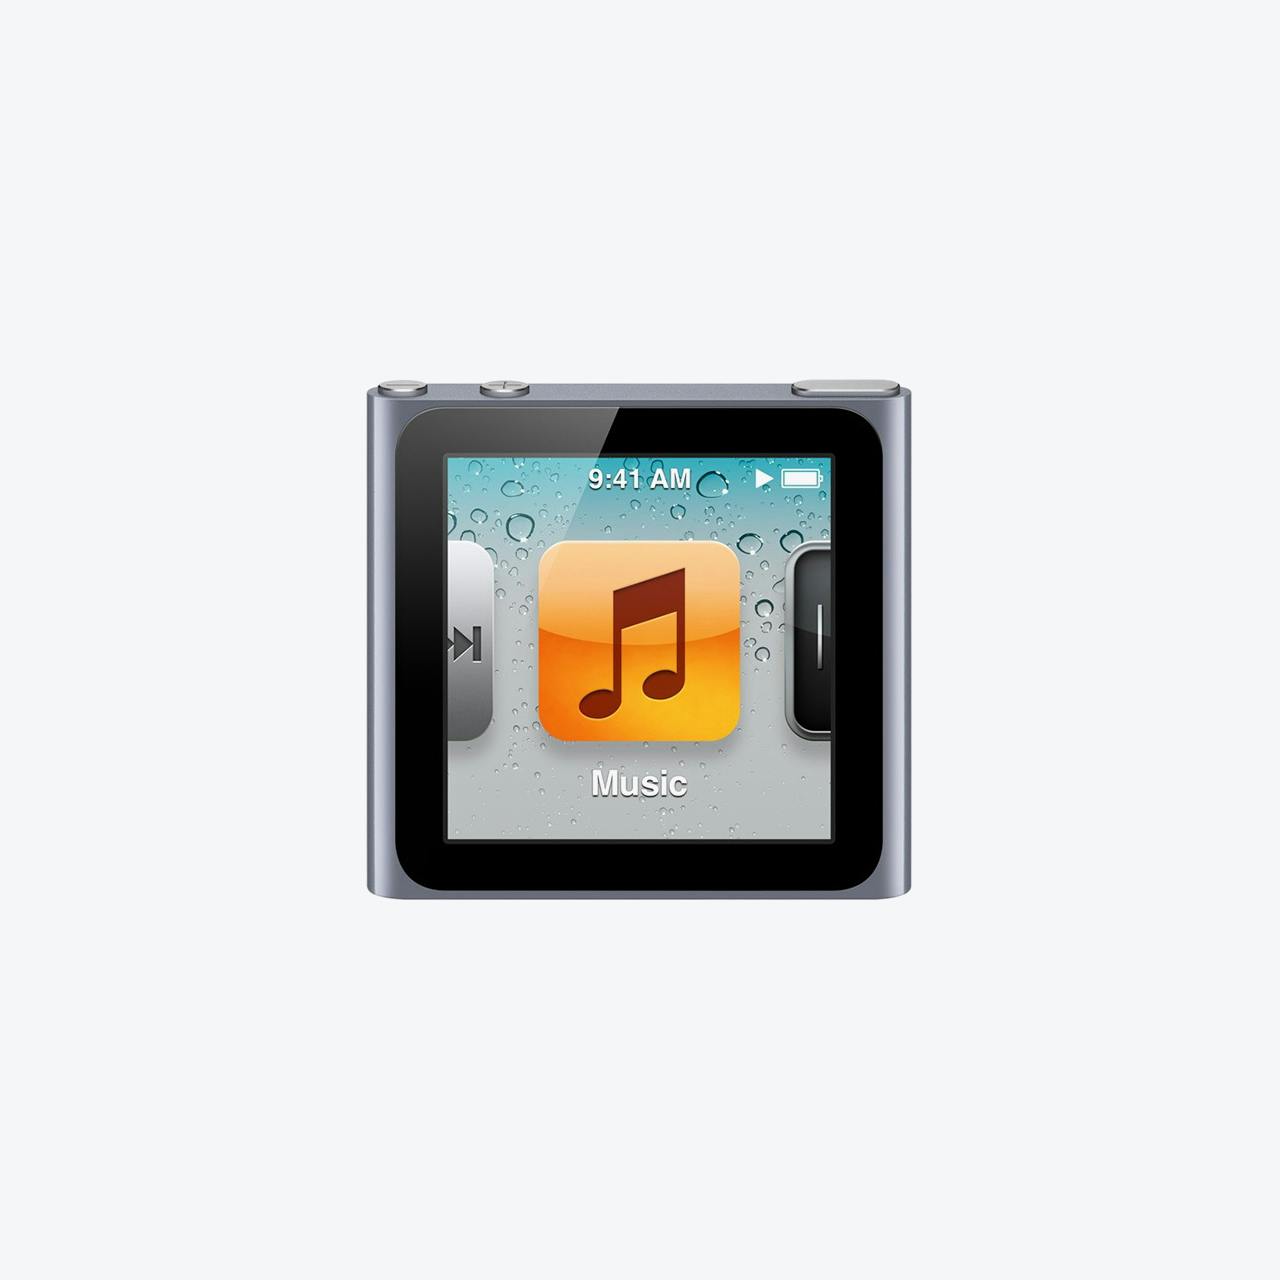 Image of an iPod Nano